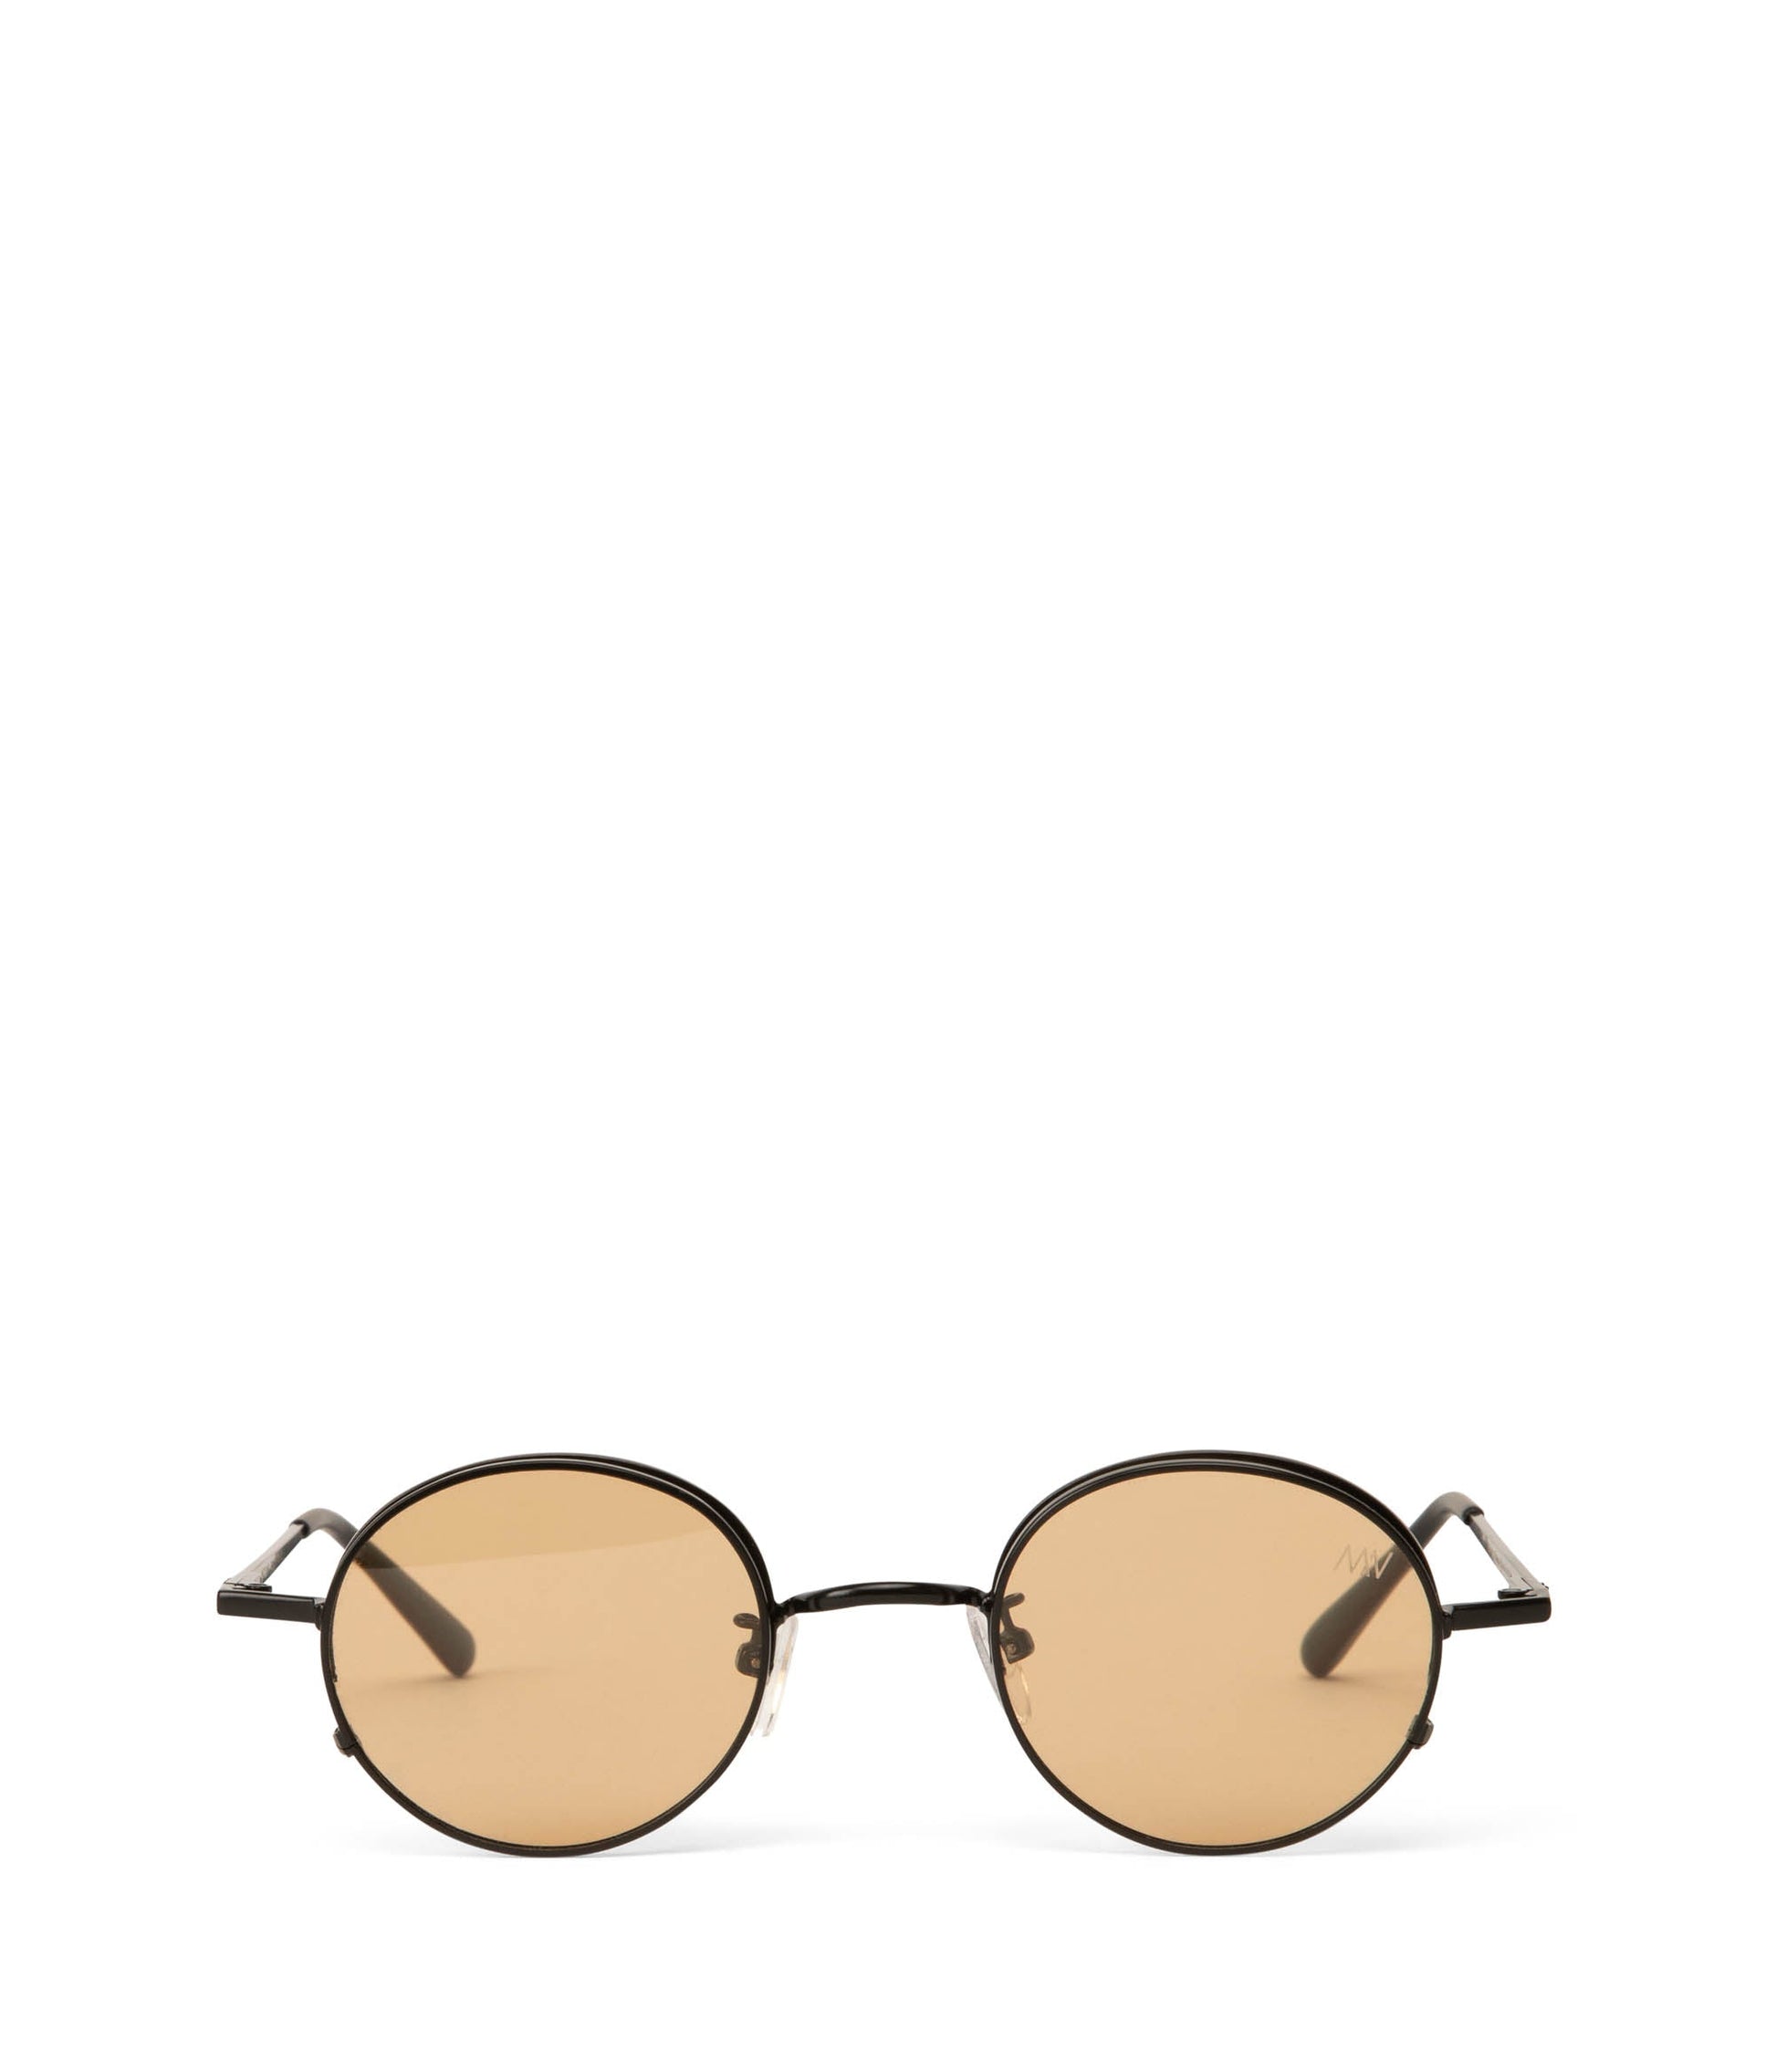 EDDON Small Round Sunglasses